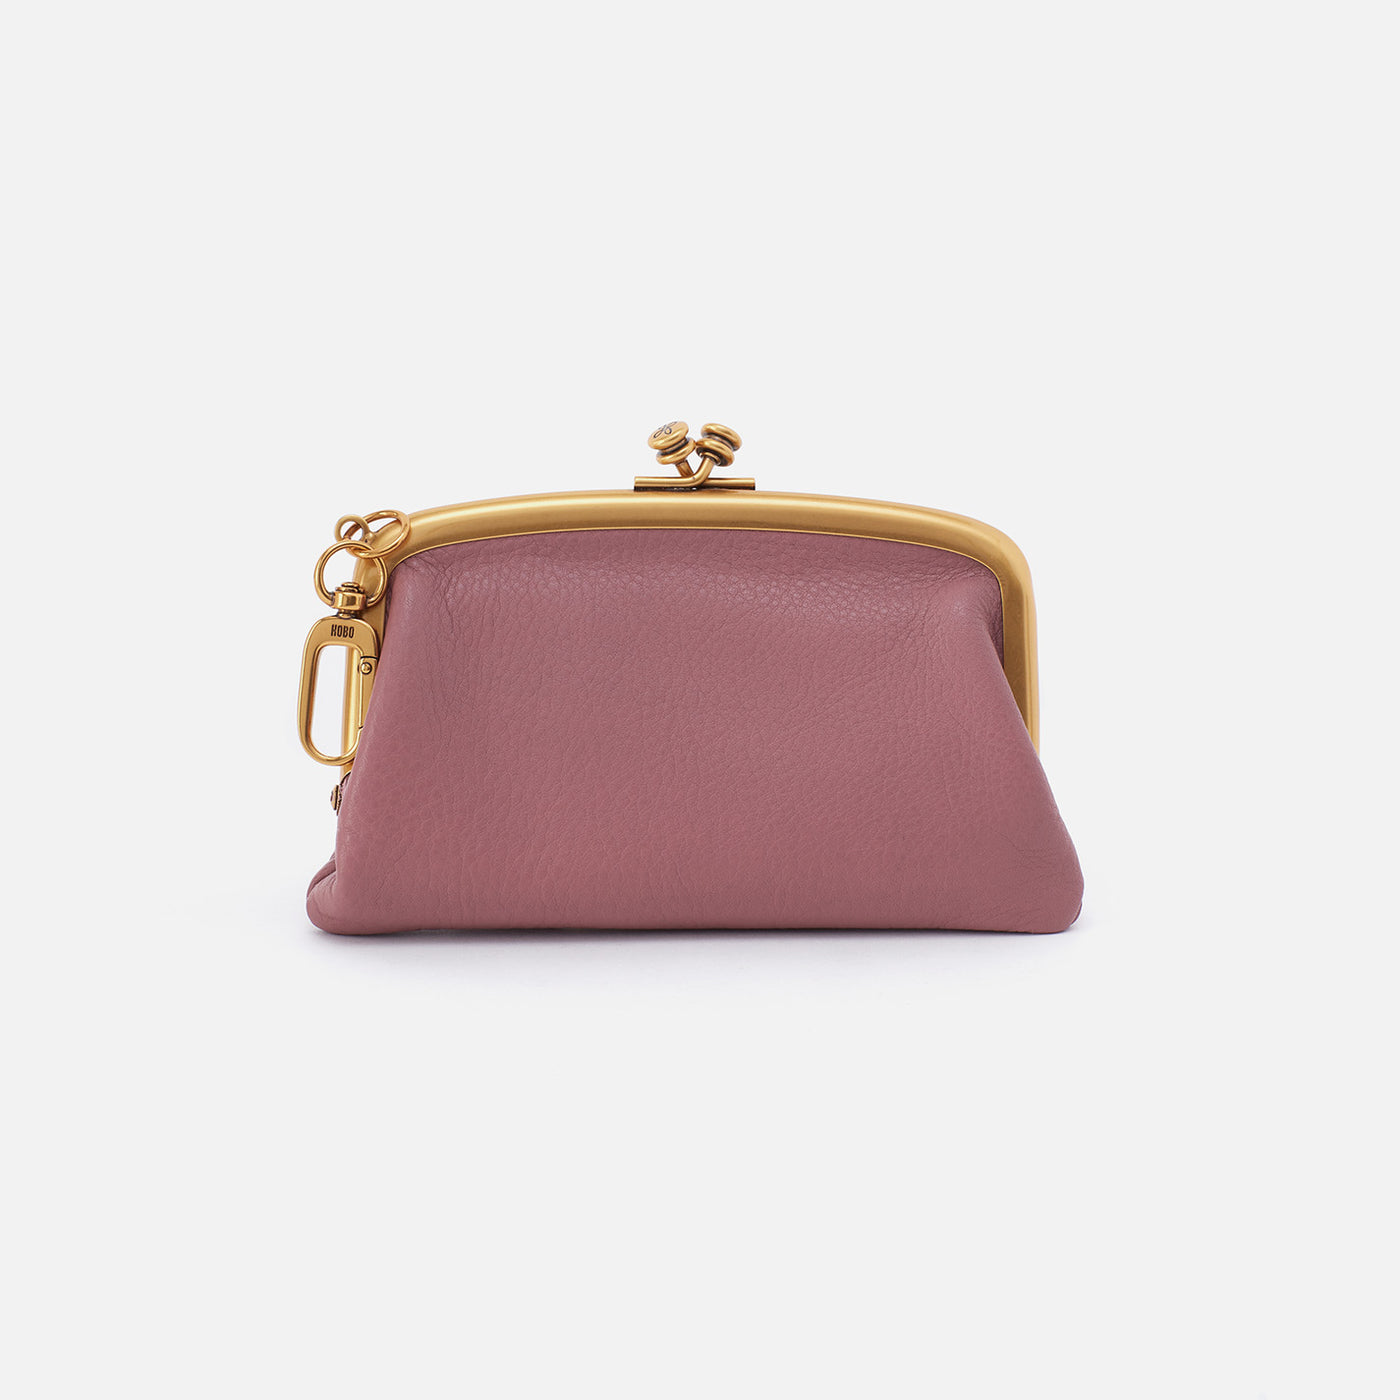 🦋rare baby pink 'kisslock' Coach purse 💗vintage... - Depop